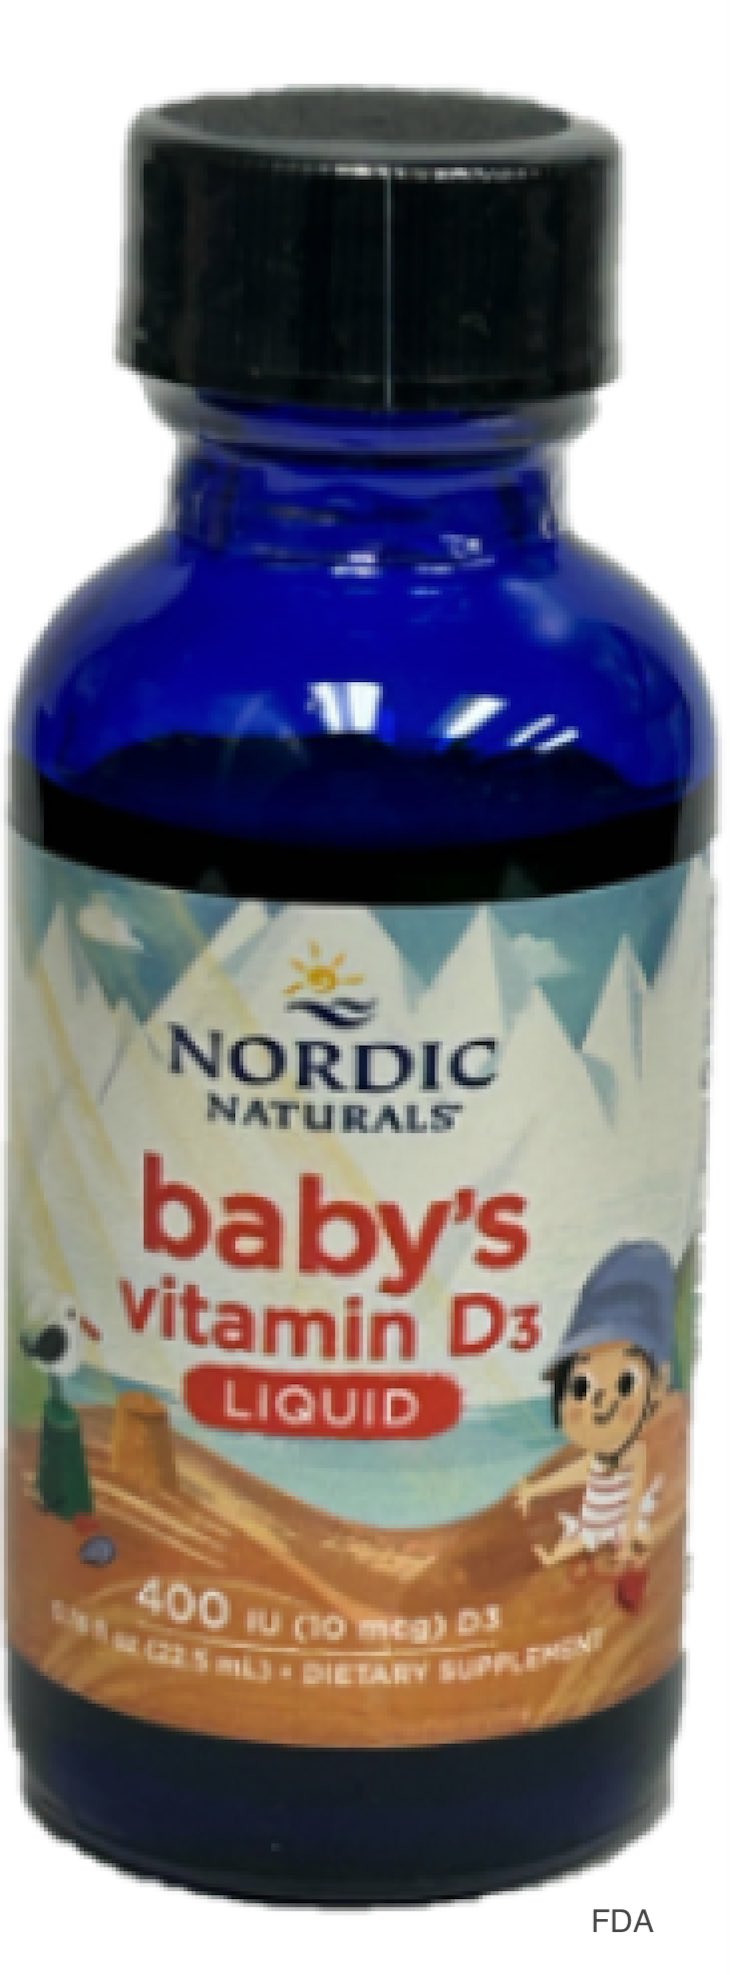 Nordic Natural's Baby's Vitamin D3 Liquid Recalled For Error